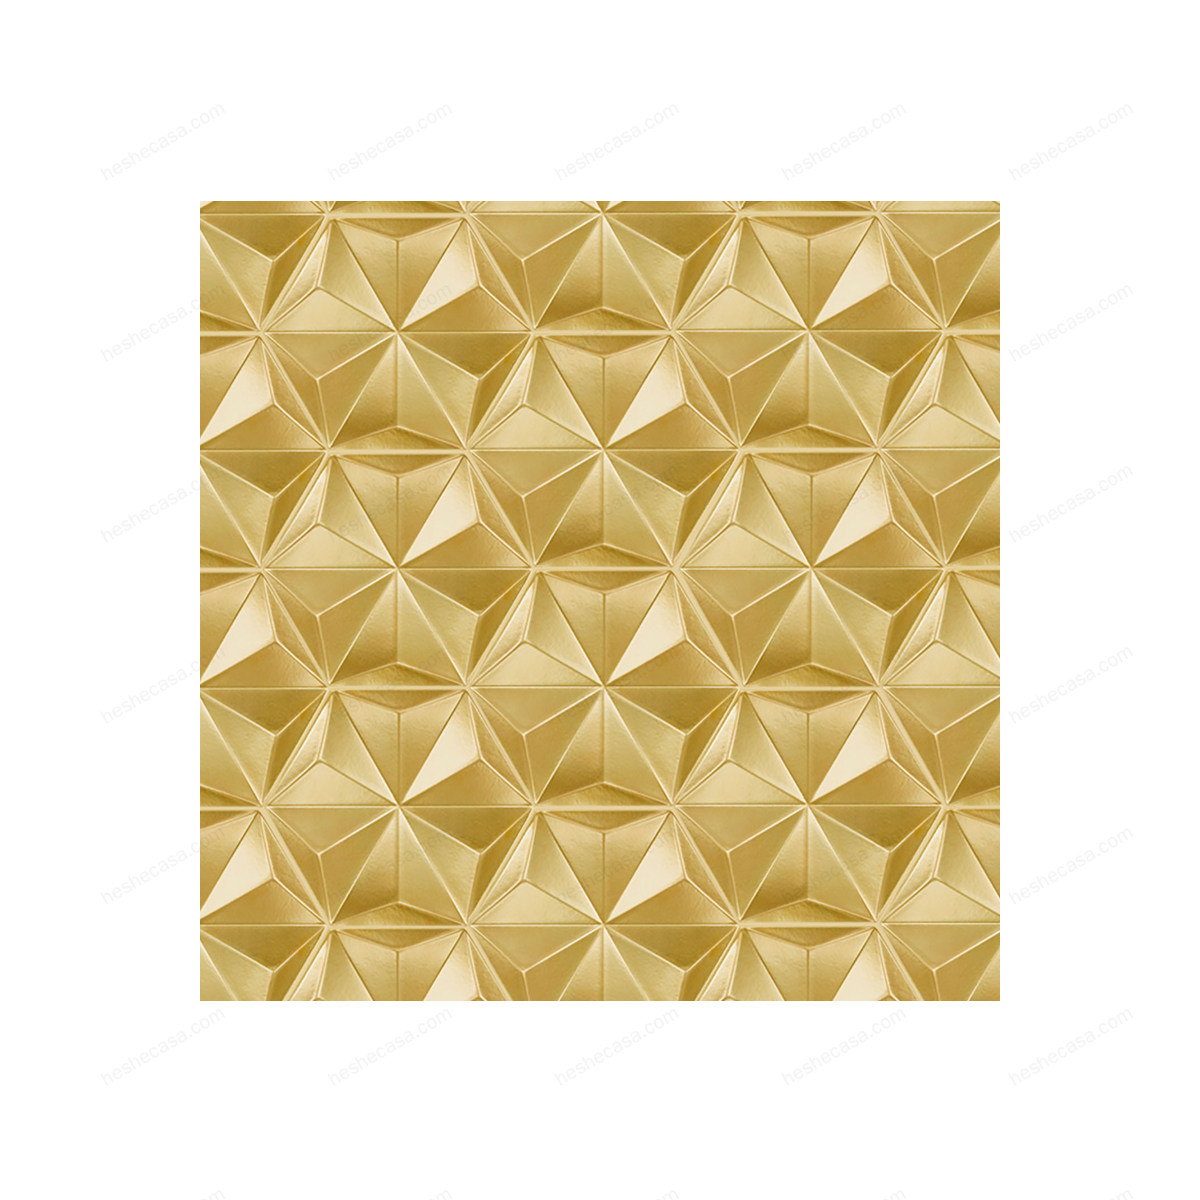 Gold Frozen Crystal瓷砖